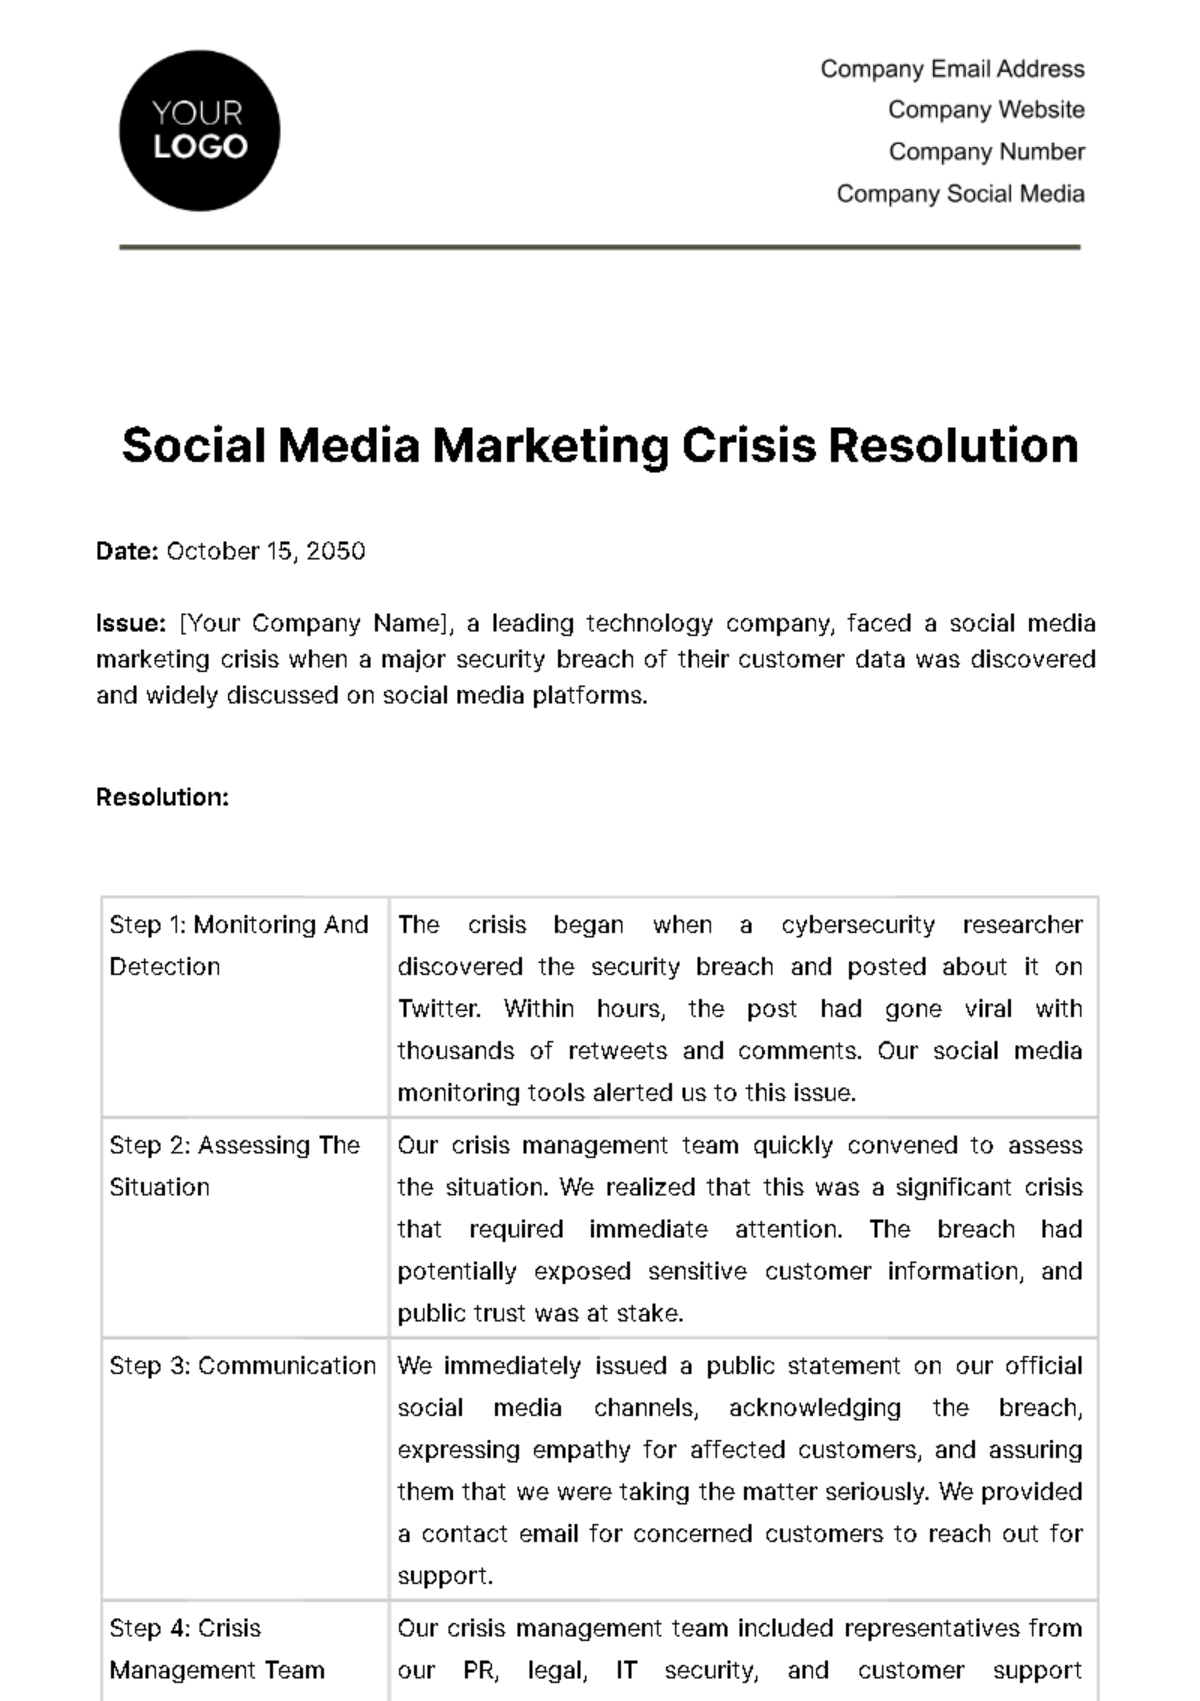 Social Media Marketing Crisis Resolution Template